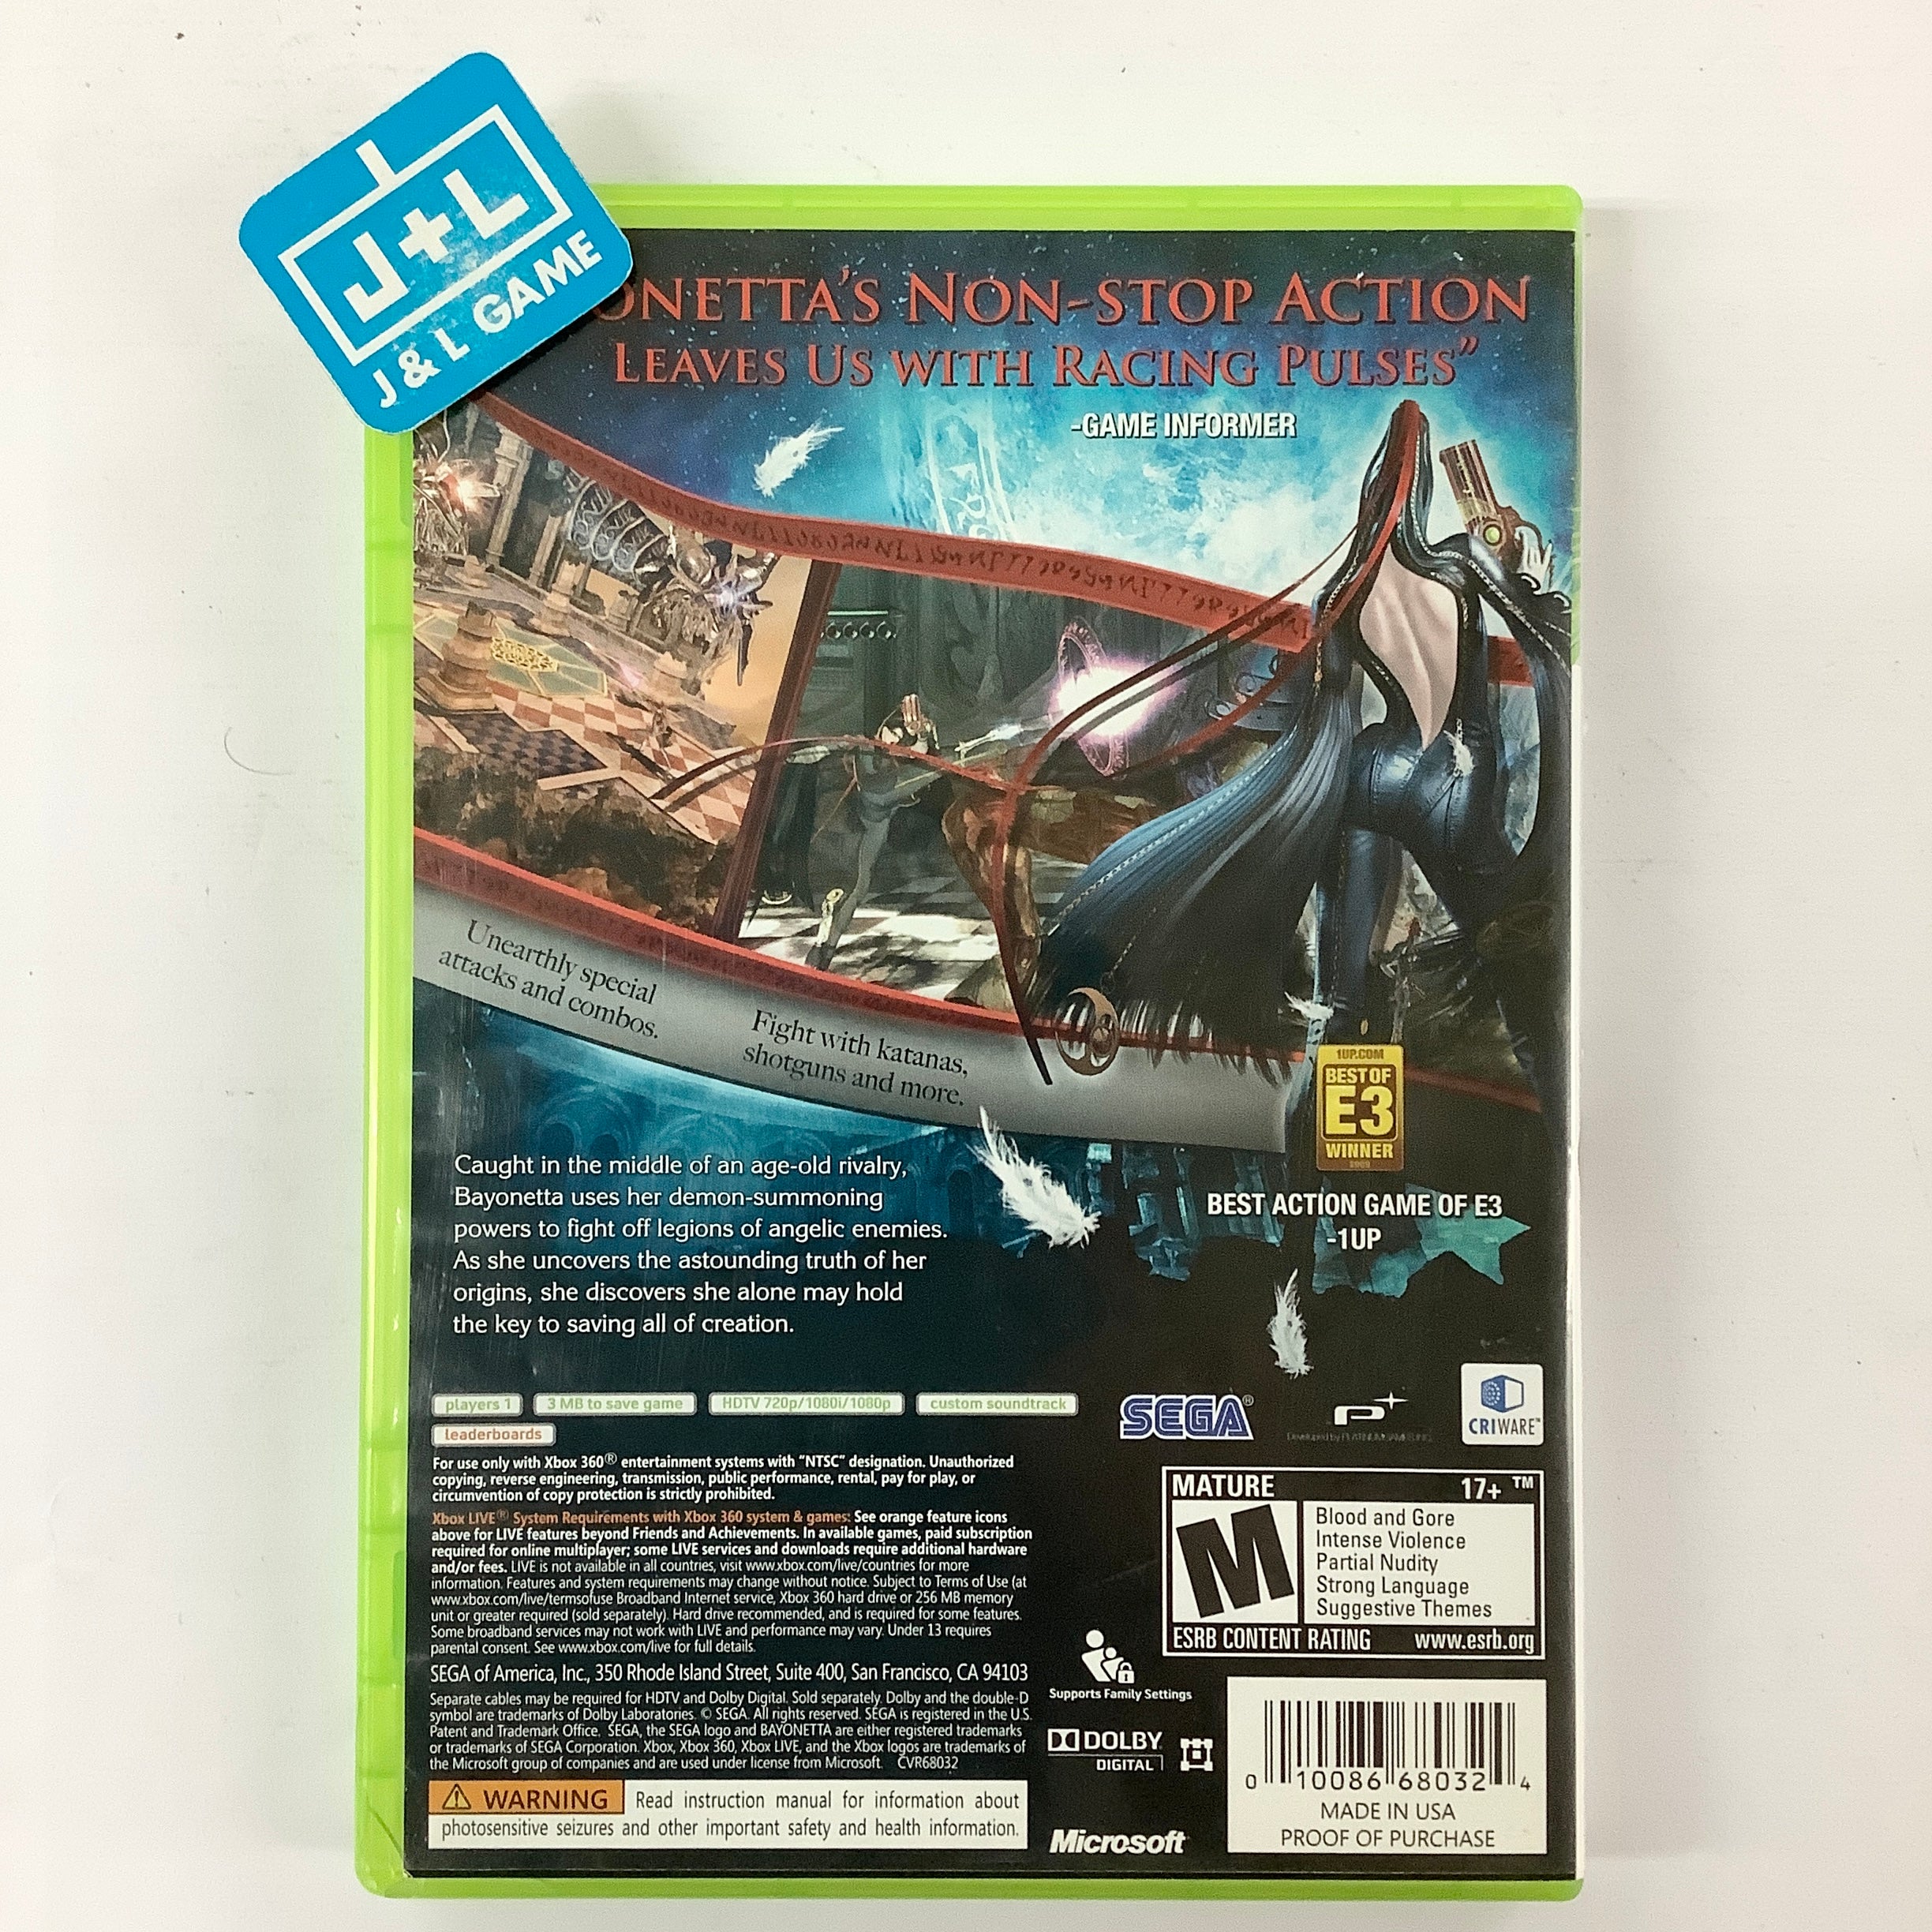 Bayonetta - Xbox 360 [Pre-Owned] Video Games Sega   